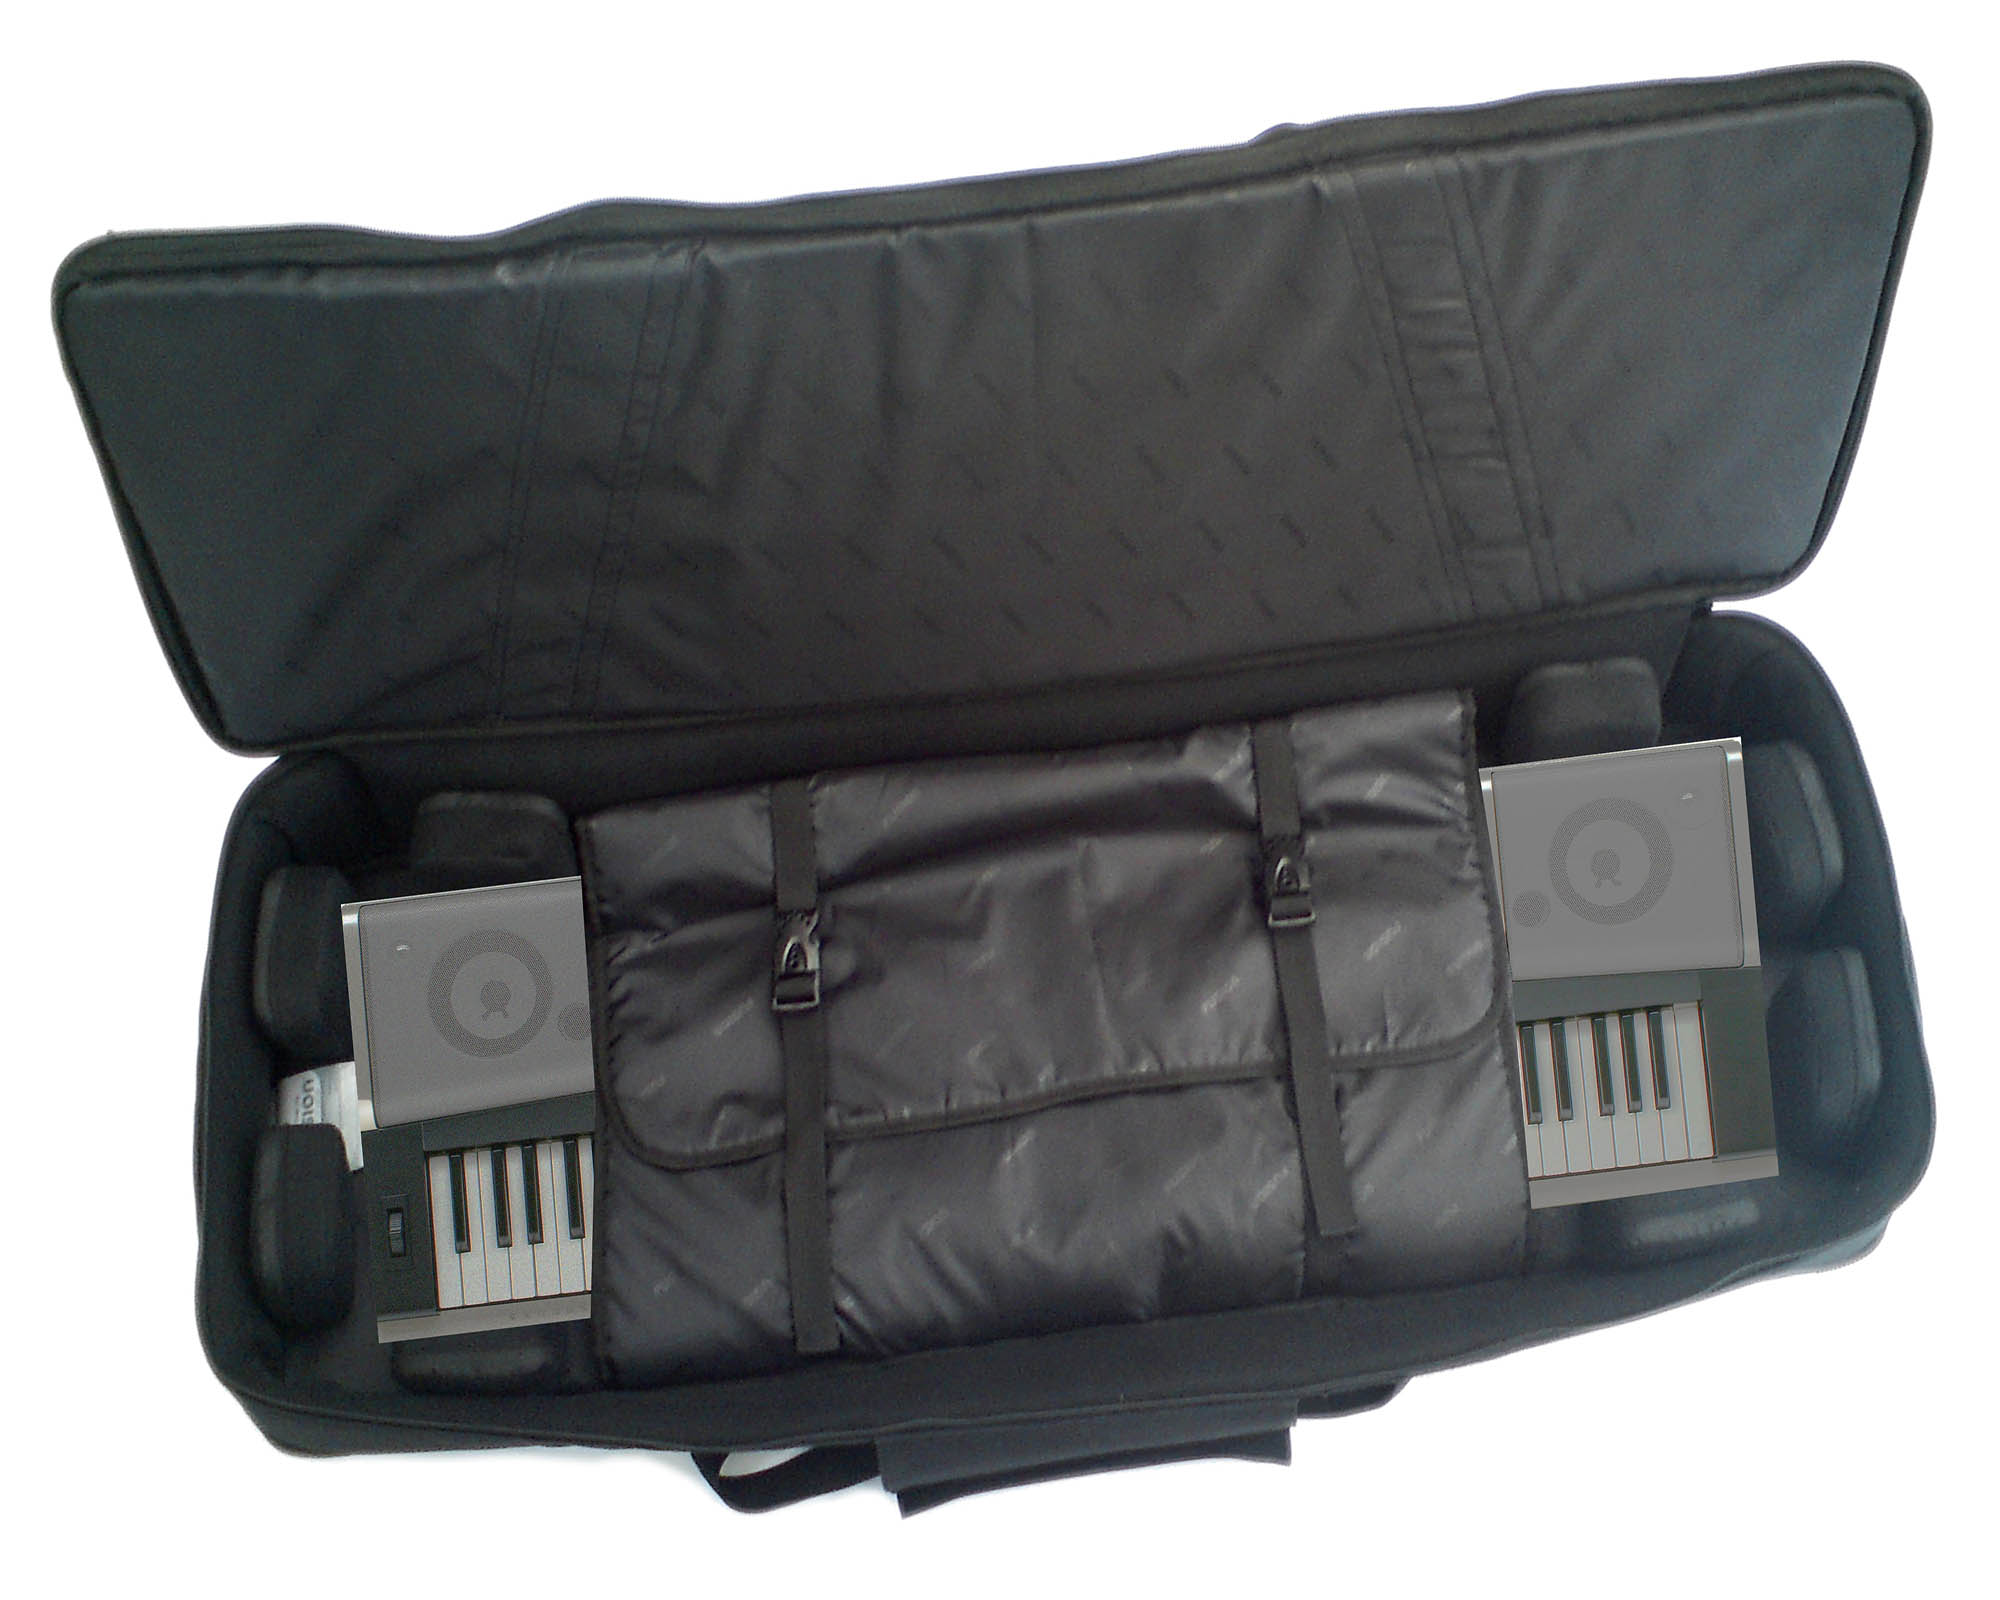 Fusion F3-25 K 12 B, Gig Bag for Keyboard 16 And Workstations - Hollywood DJ